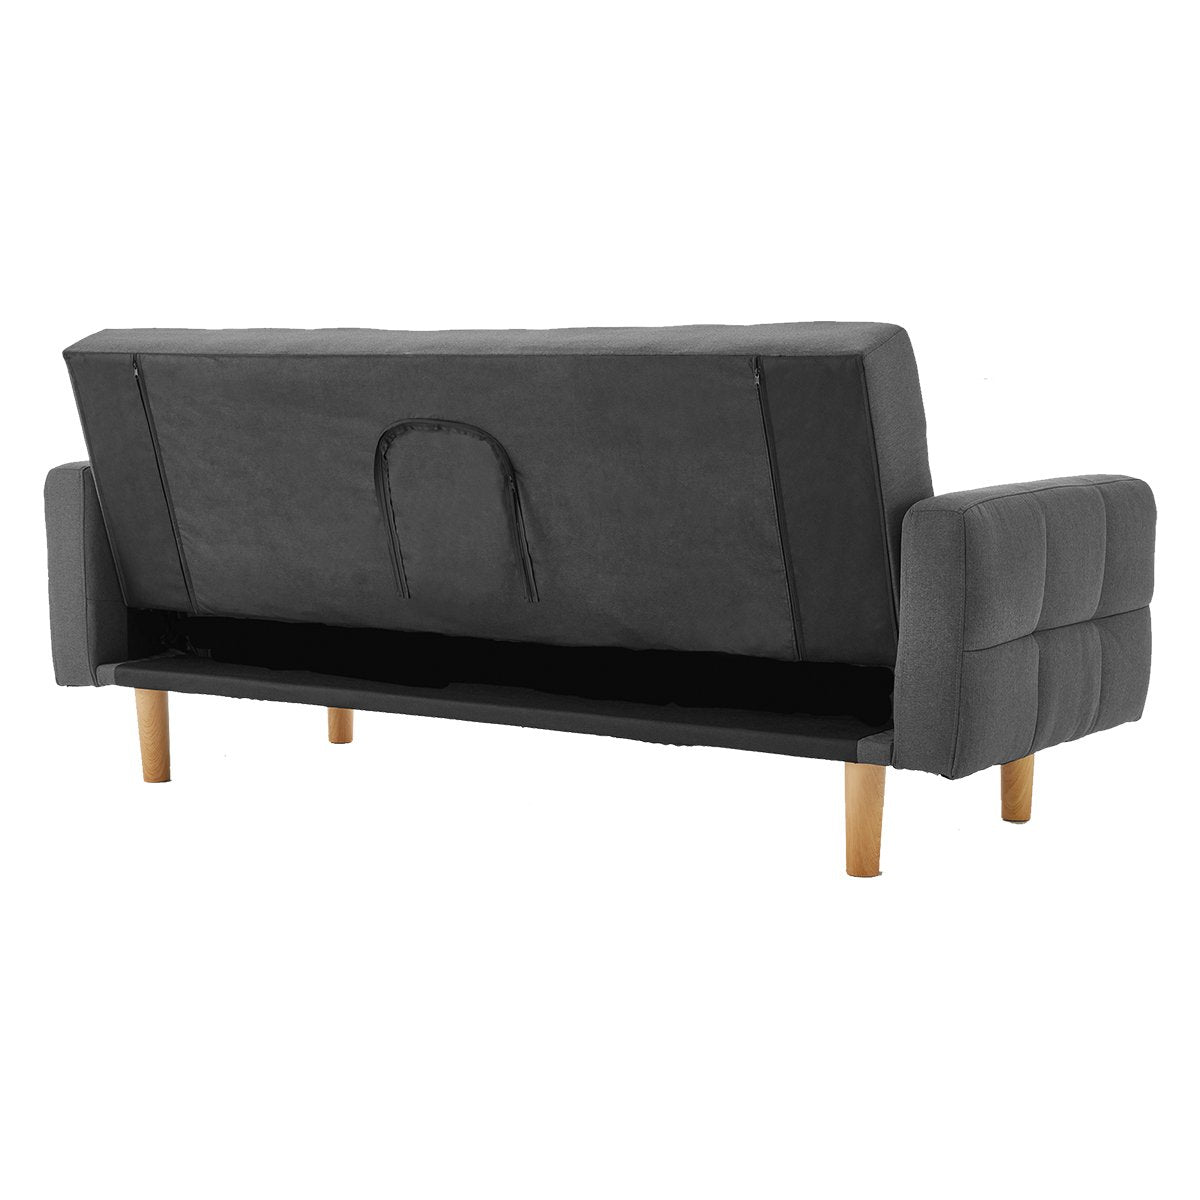 Sarantino 3-Seater Fabric Sofa Bed Futon - Dark Grey